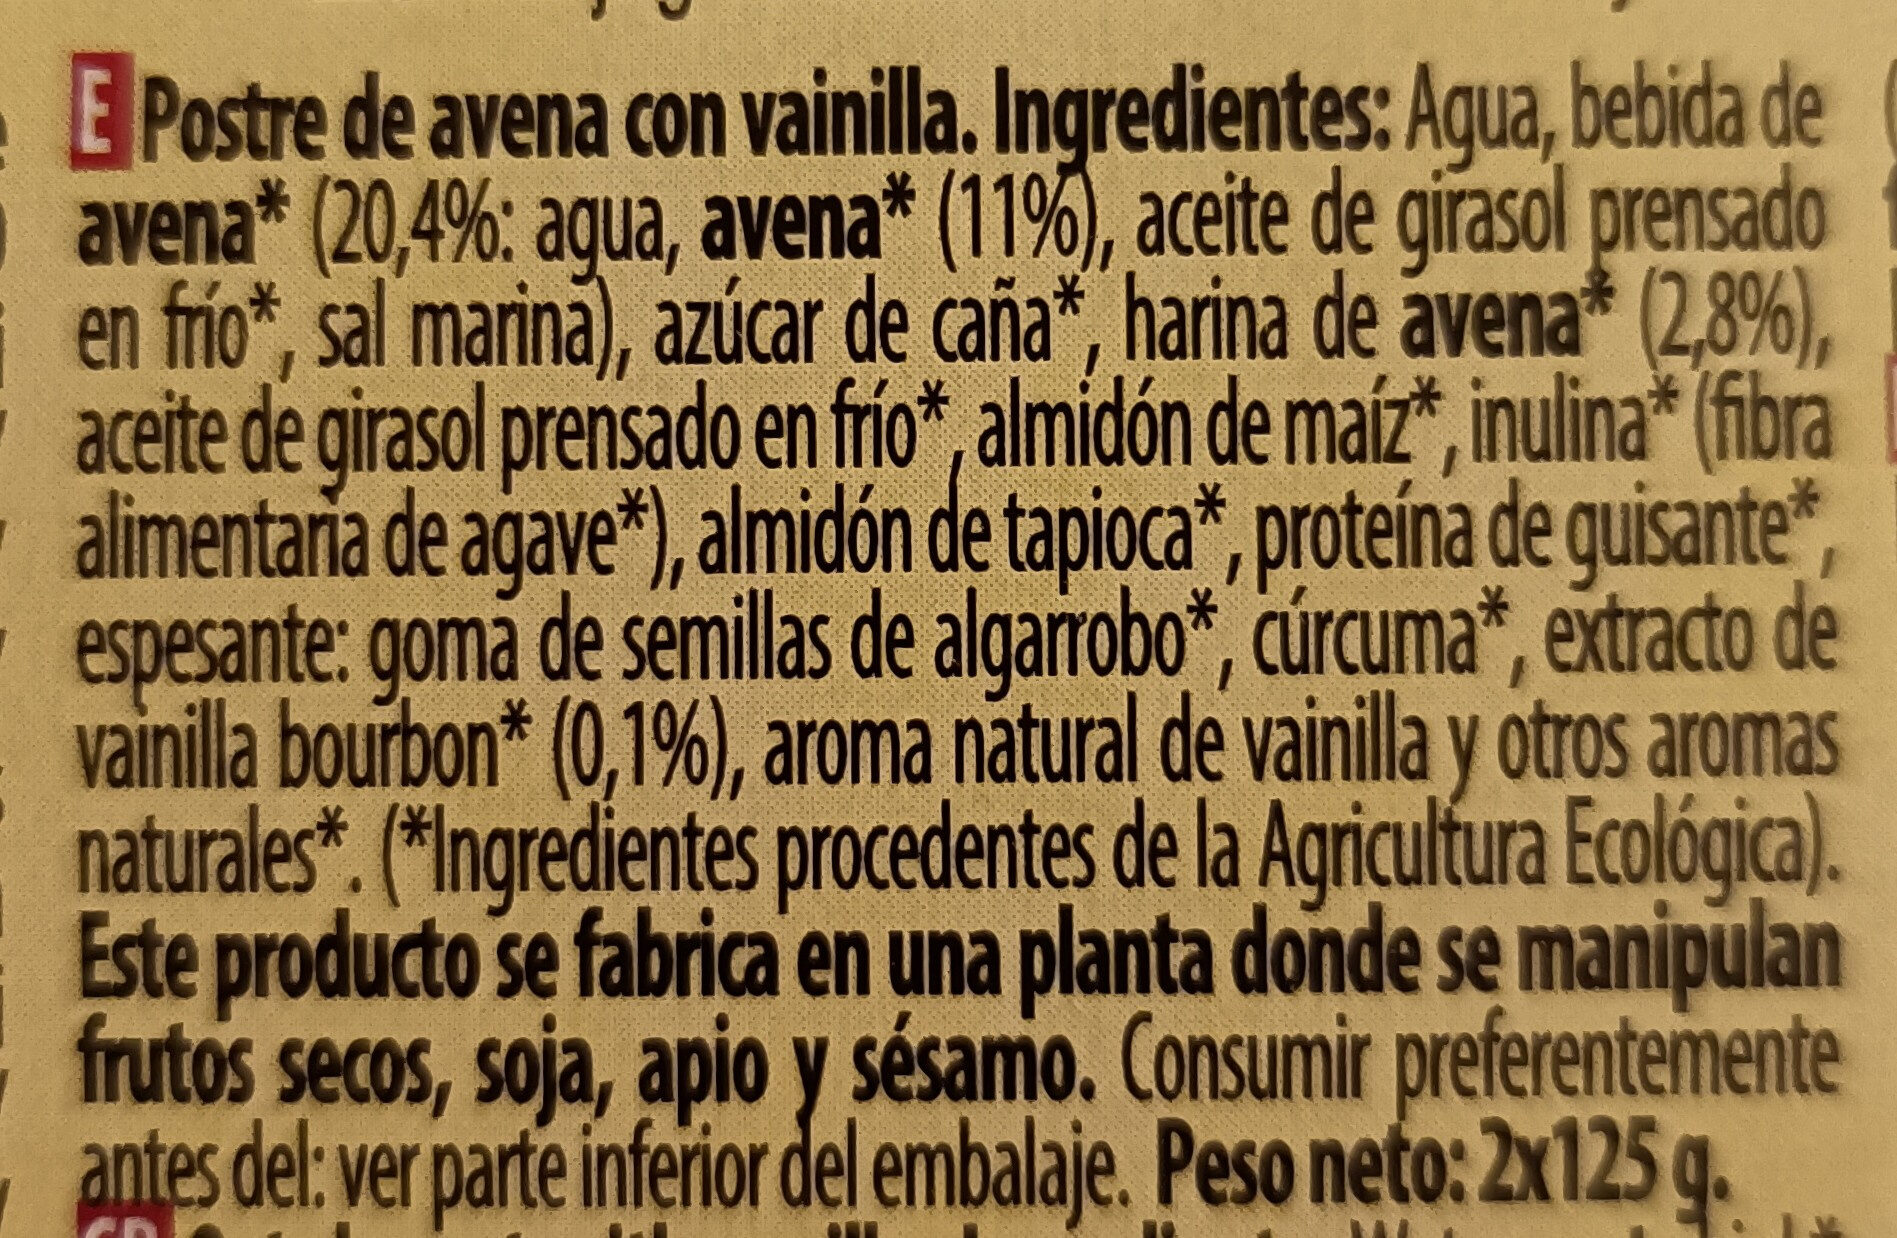 Postre de avena vanilla - Ingredients - es